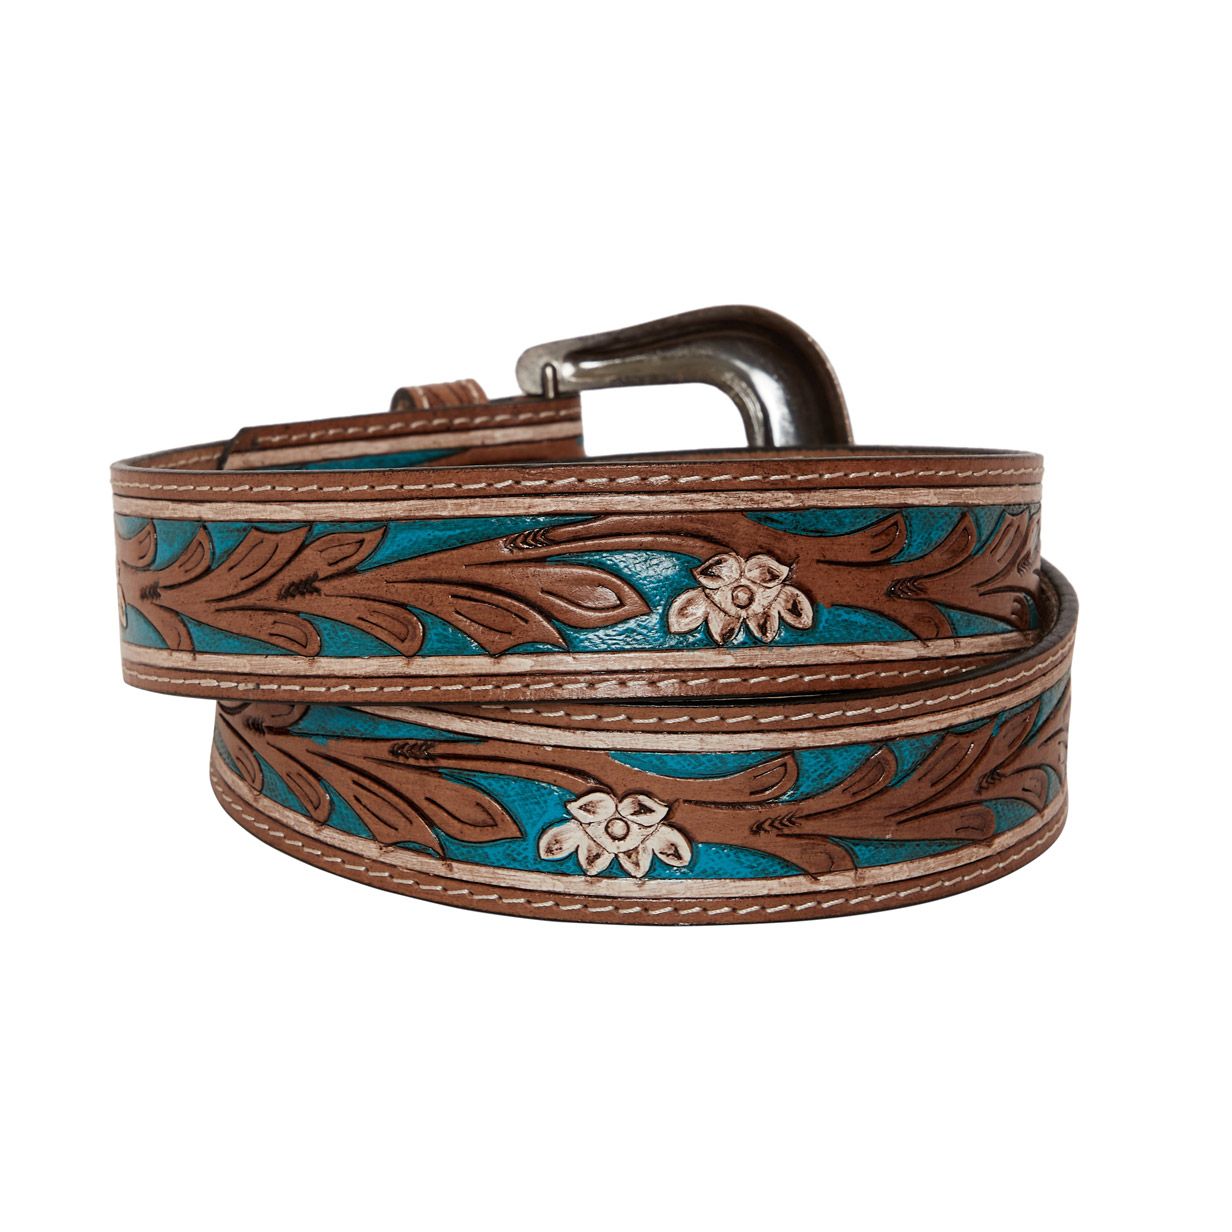 Myra Bag Checkered Brown Hand-Tooled Leather Belt S-4059, Medium